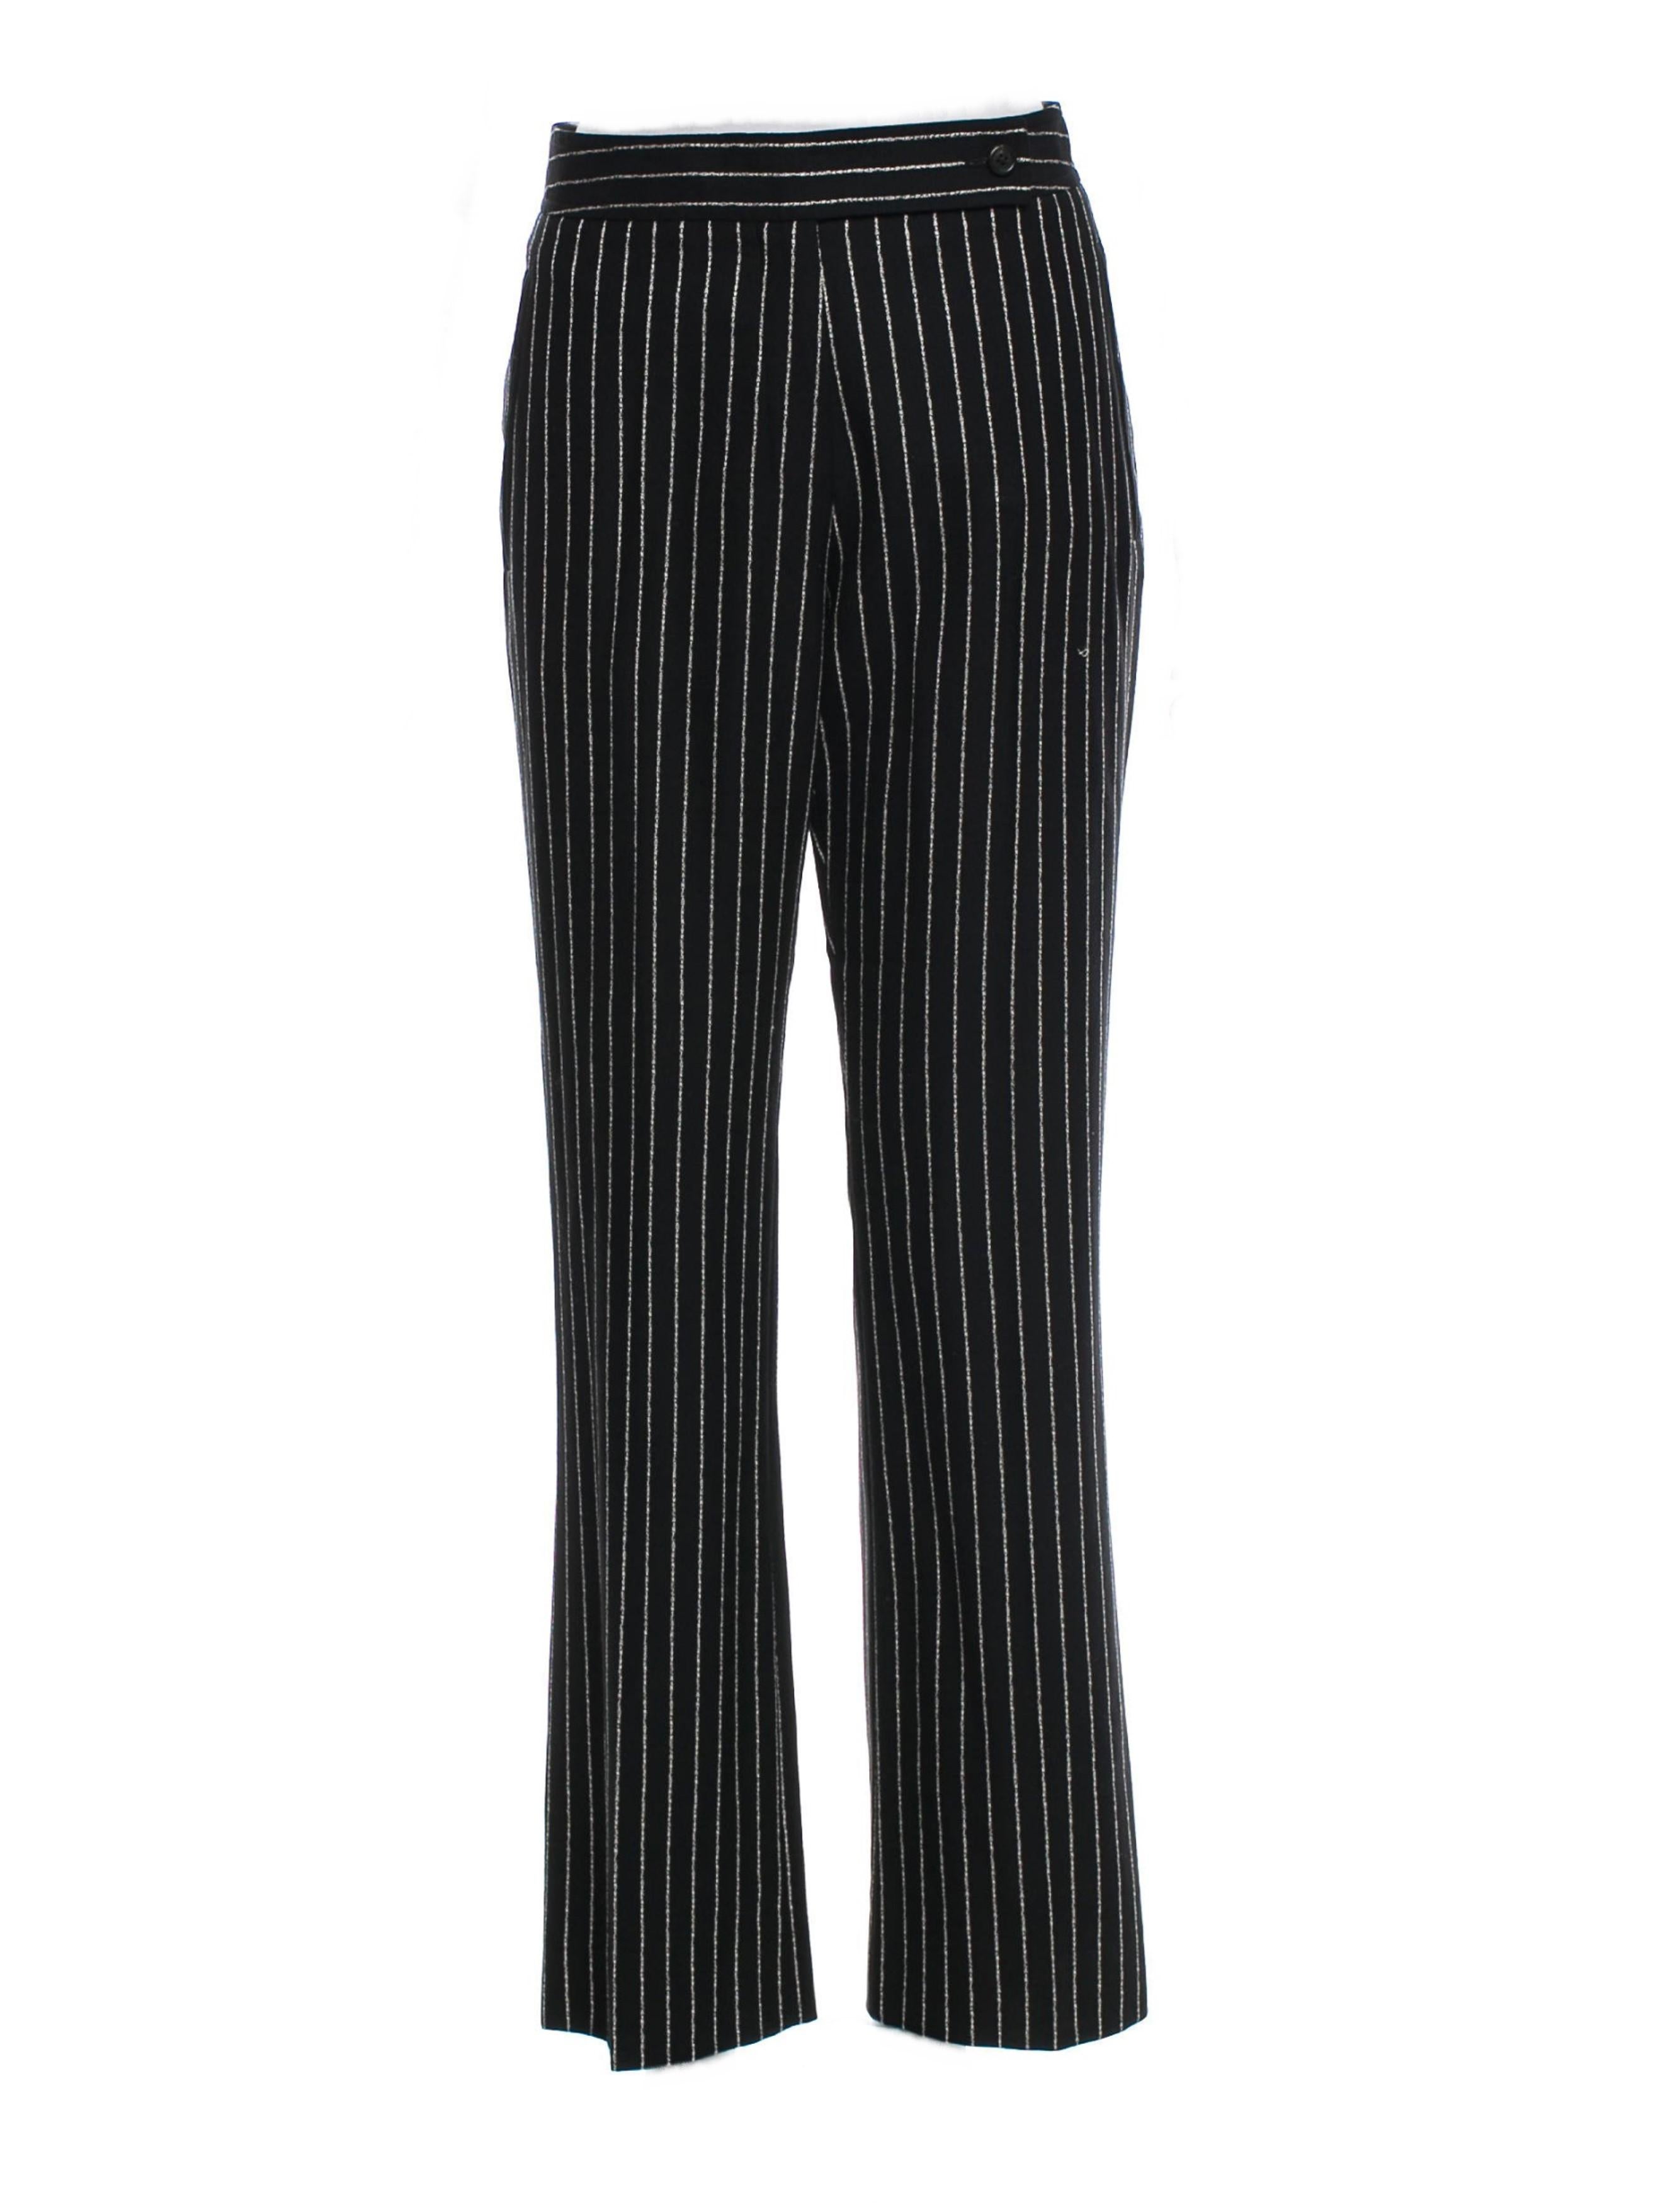 New Tom Ford For Yves Saint Laurent YSL Pinstripe Pantsuit Suit FR40 5